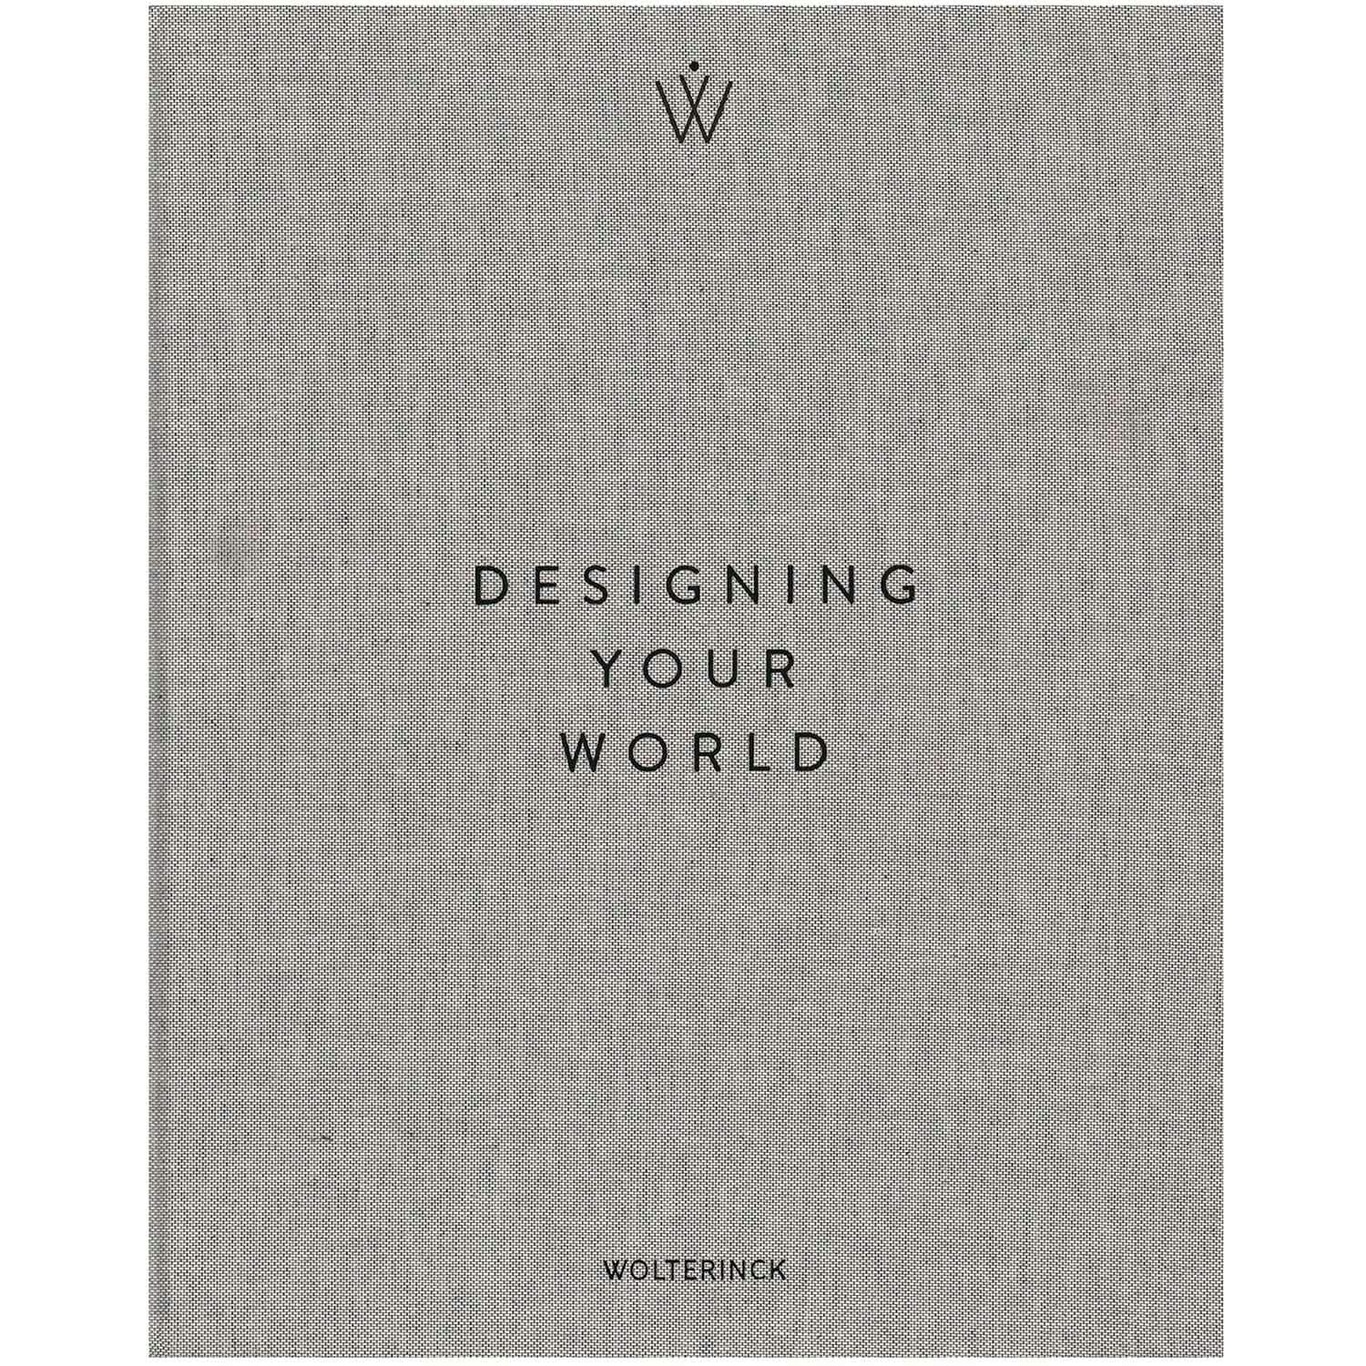 Designing your World Bok